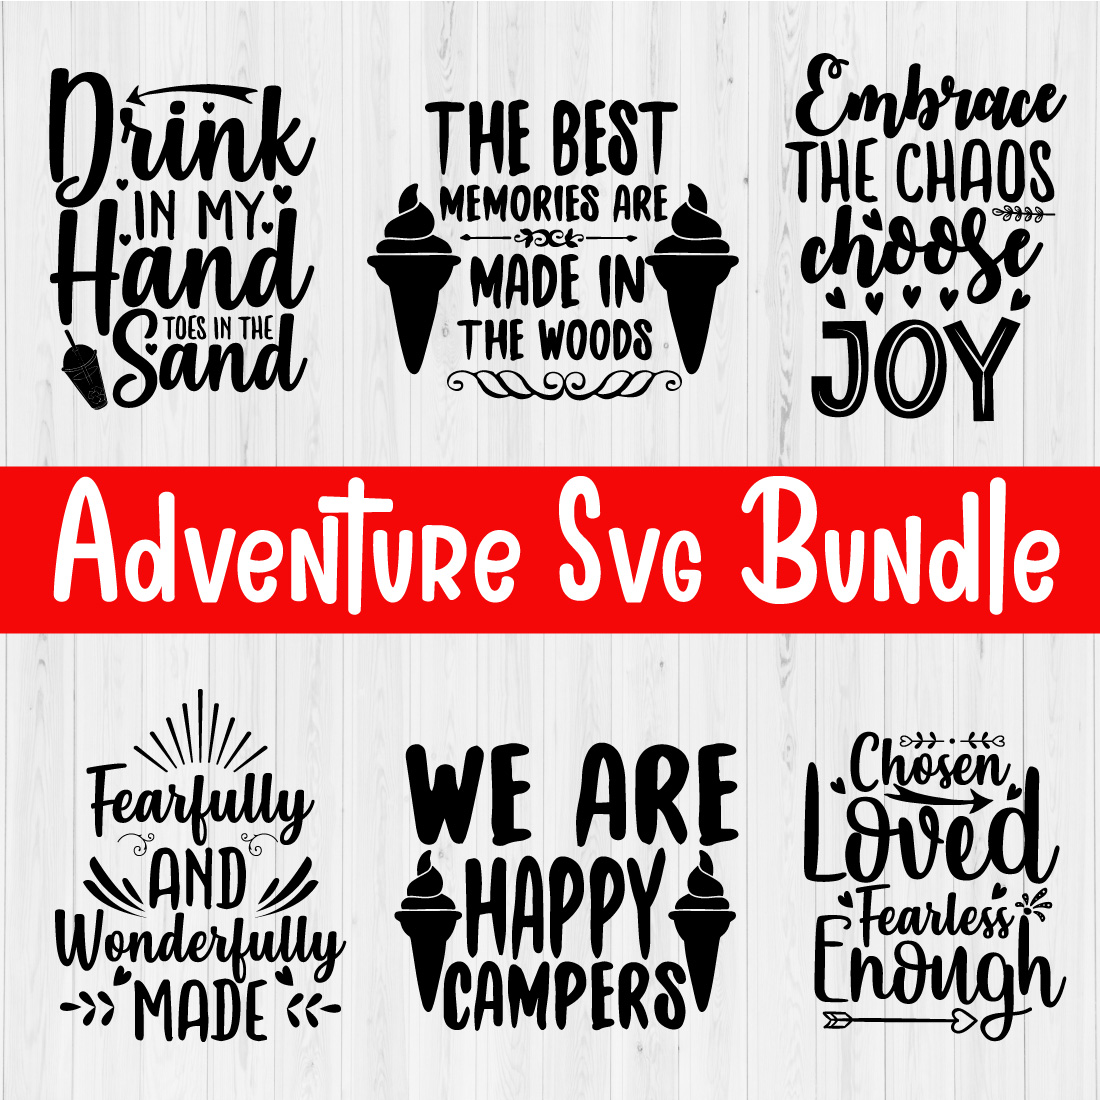 Adventure Svg Bundle Vol15 cover image.